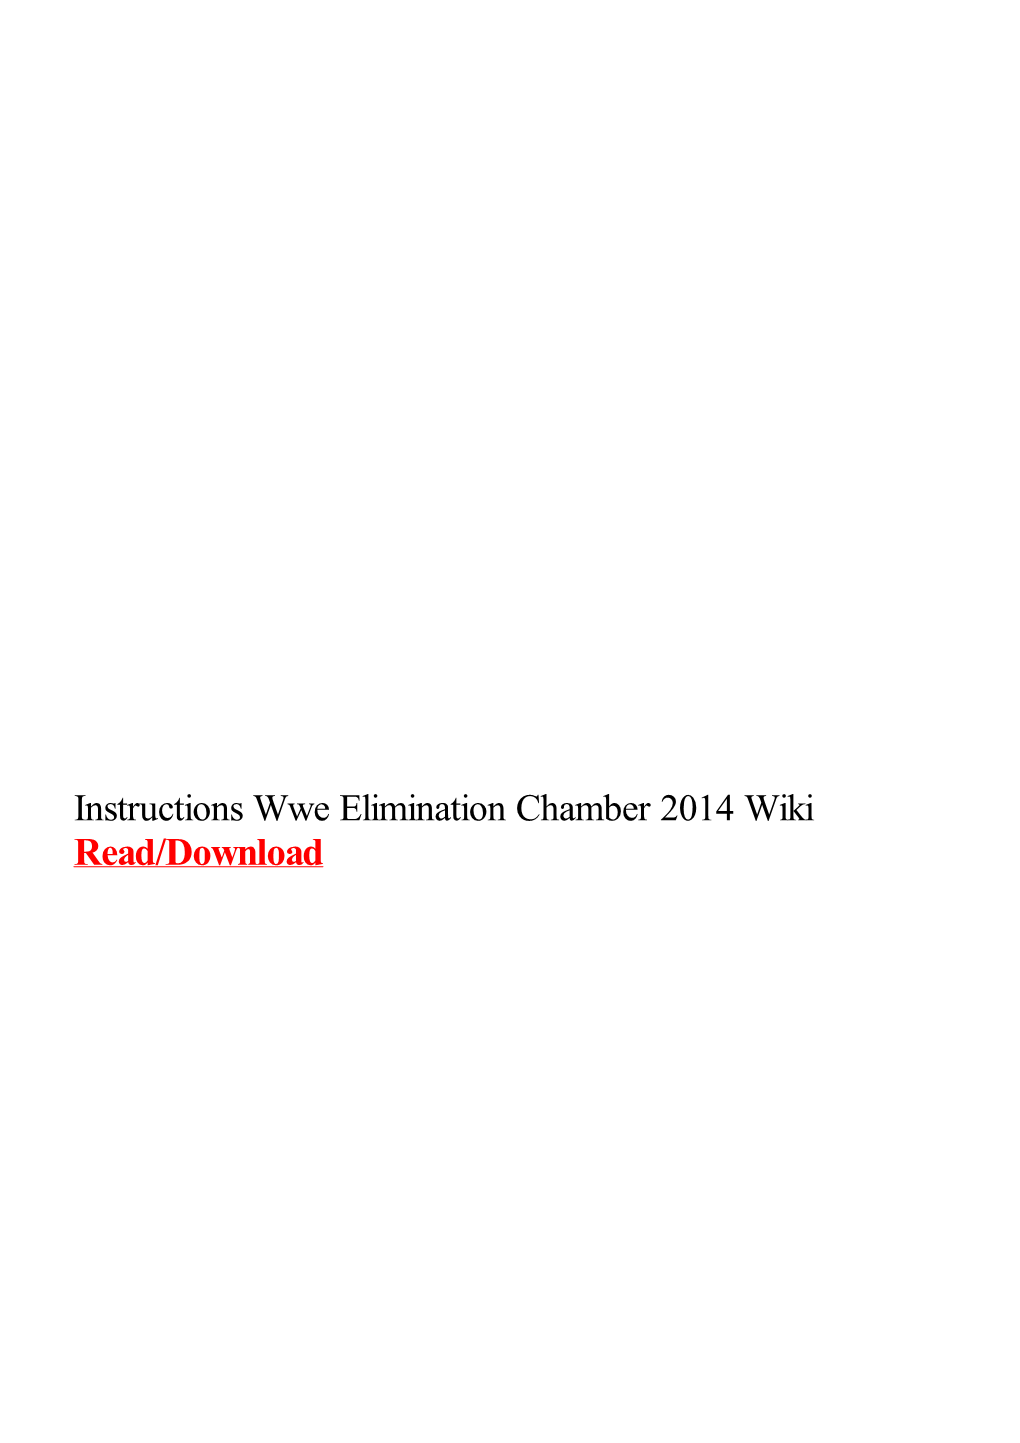 Instructions Wwe Elimination Chamber 2014 Wiki